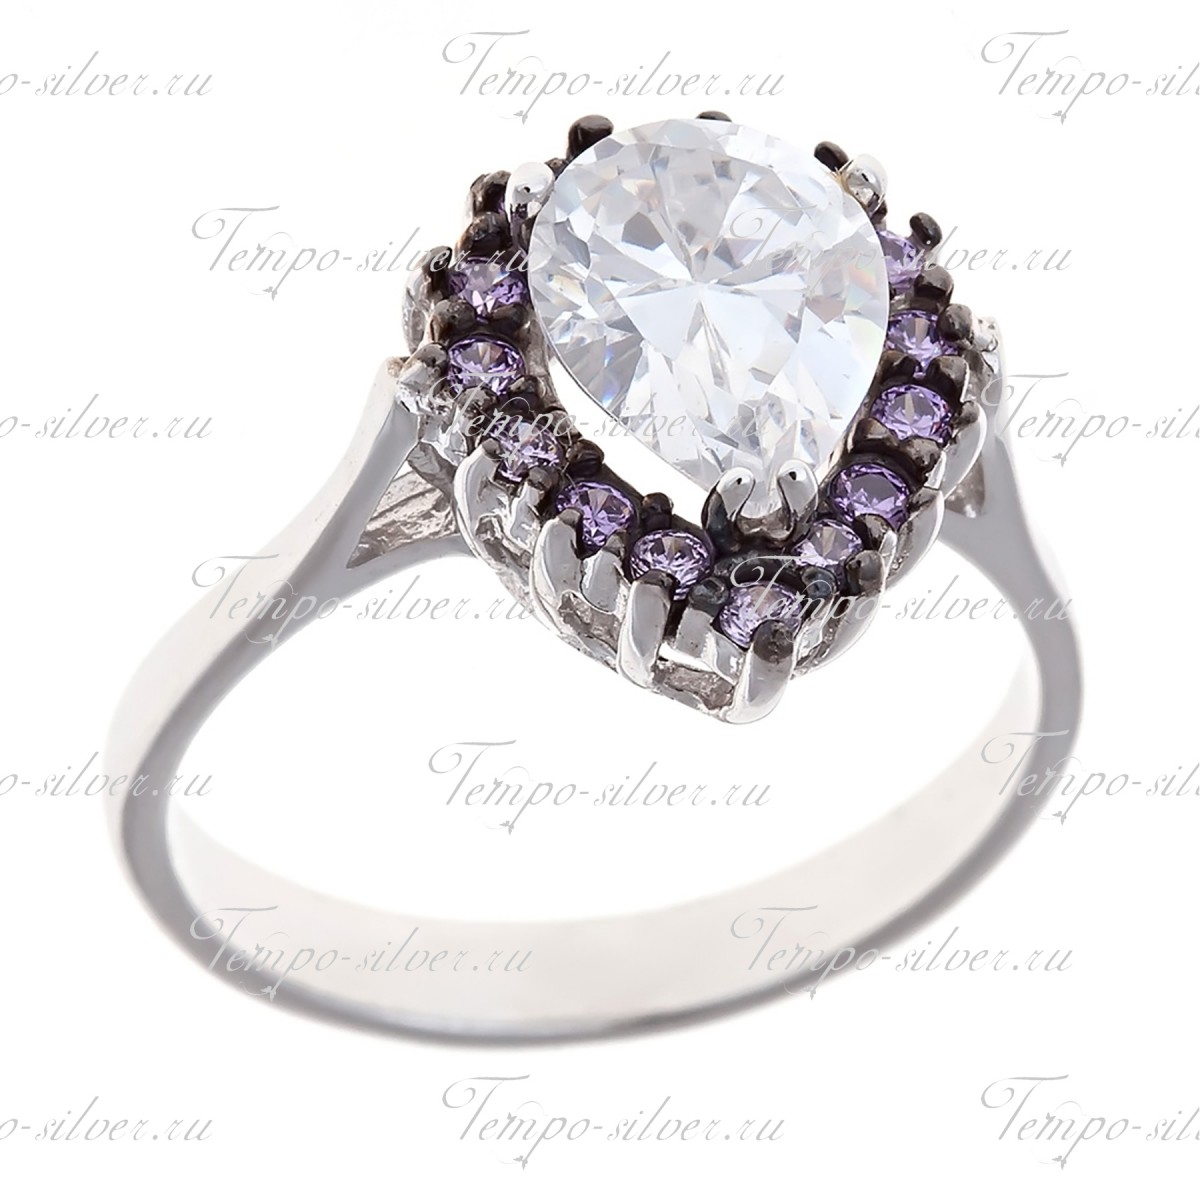 Кольцо в форме капли с фиолетовыми камнями по контуру цена